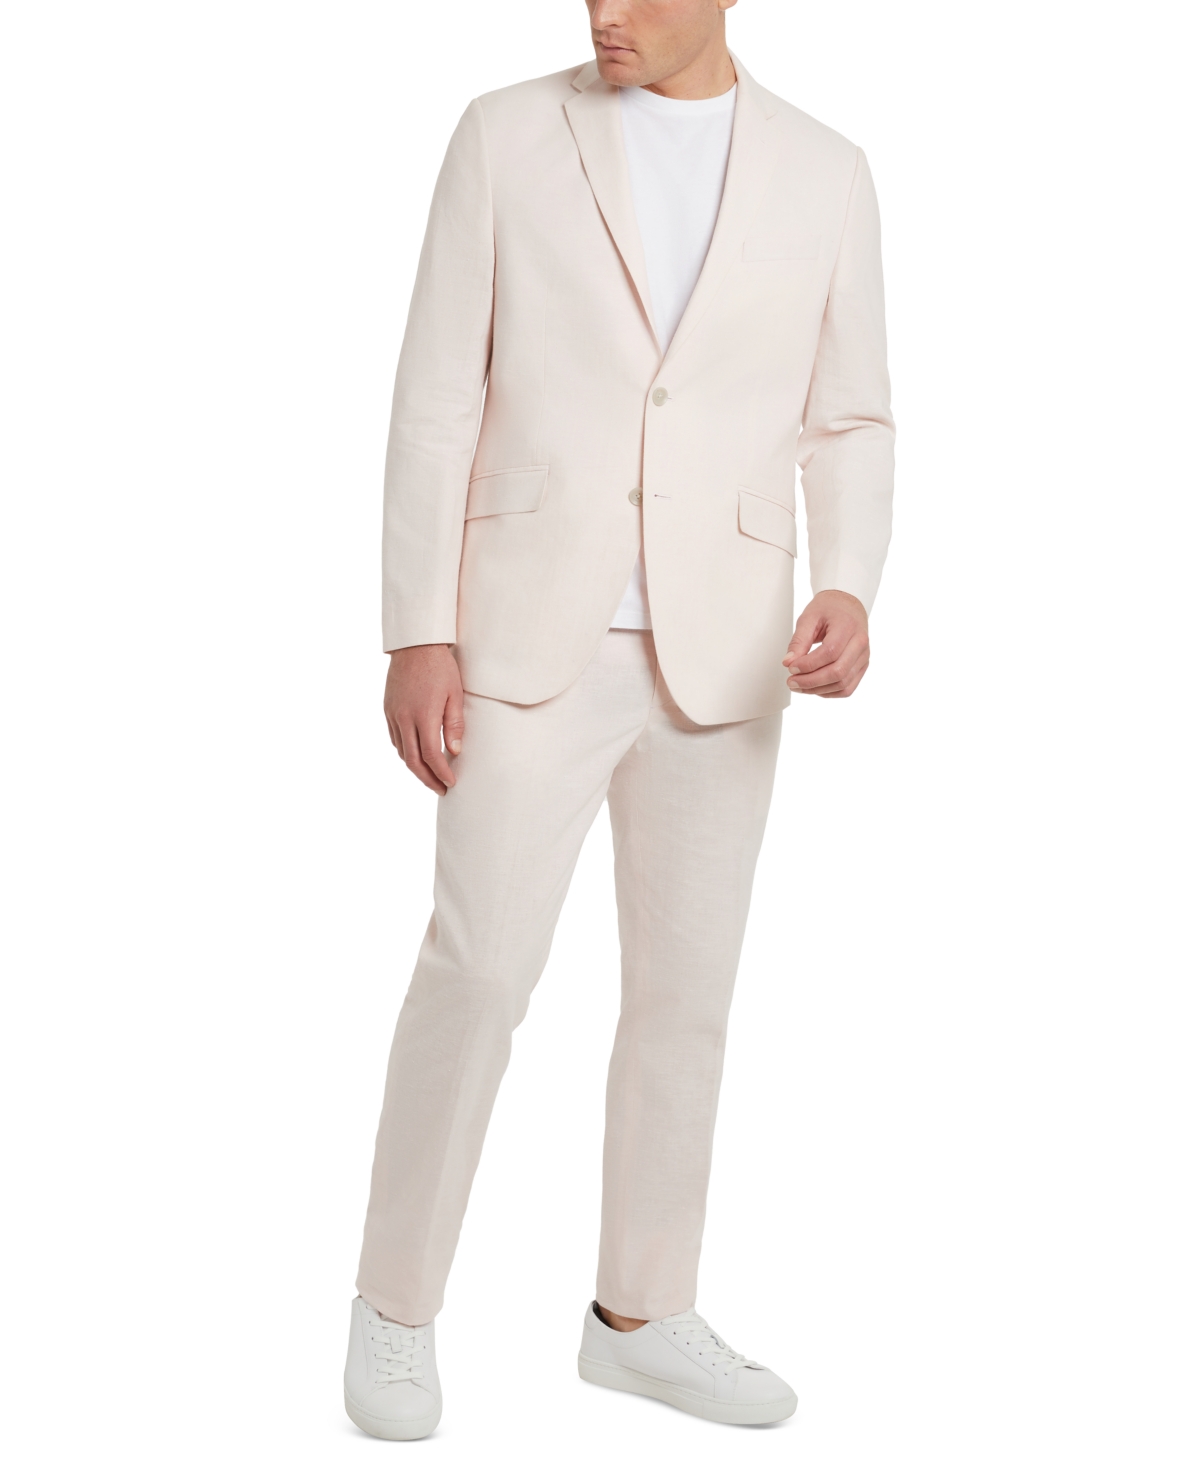 Kenneth Cole Reaction Men's Slim-Fit Stretch Linen Solid Suit